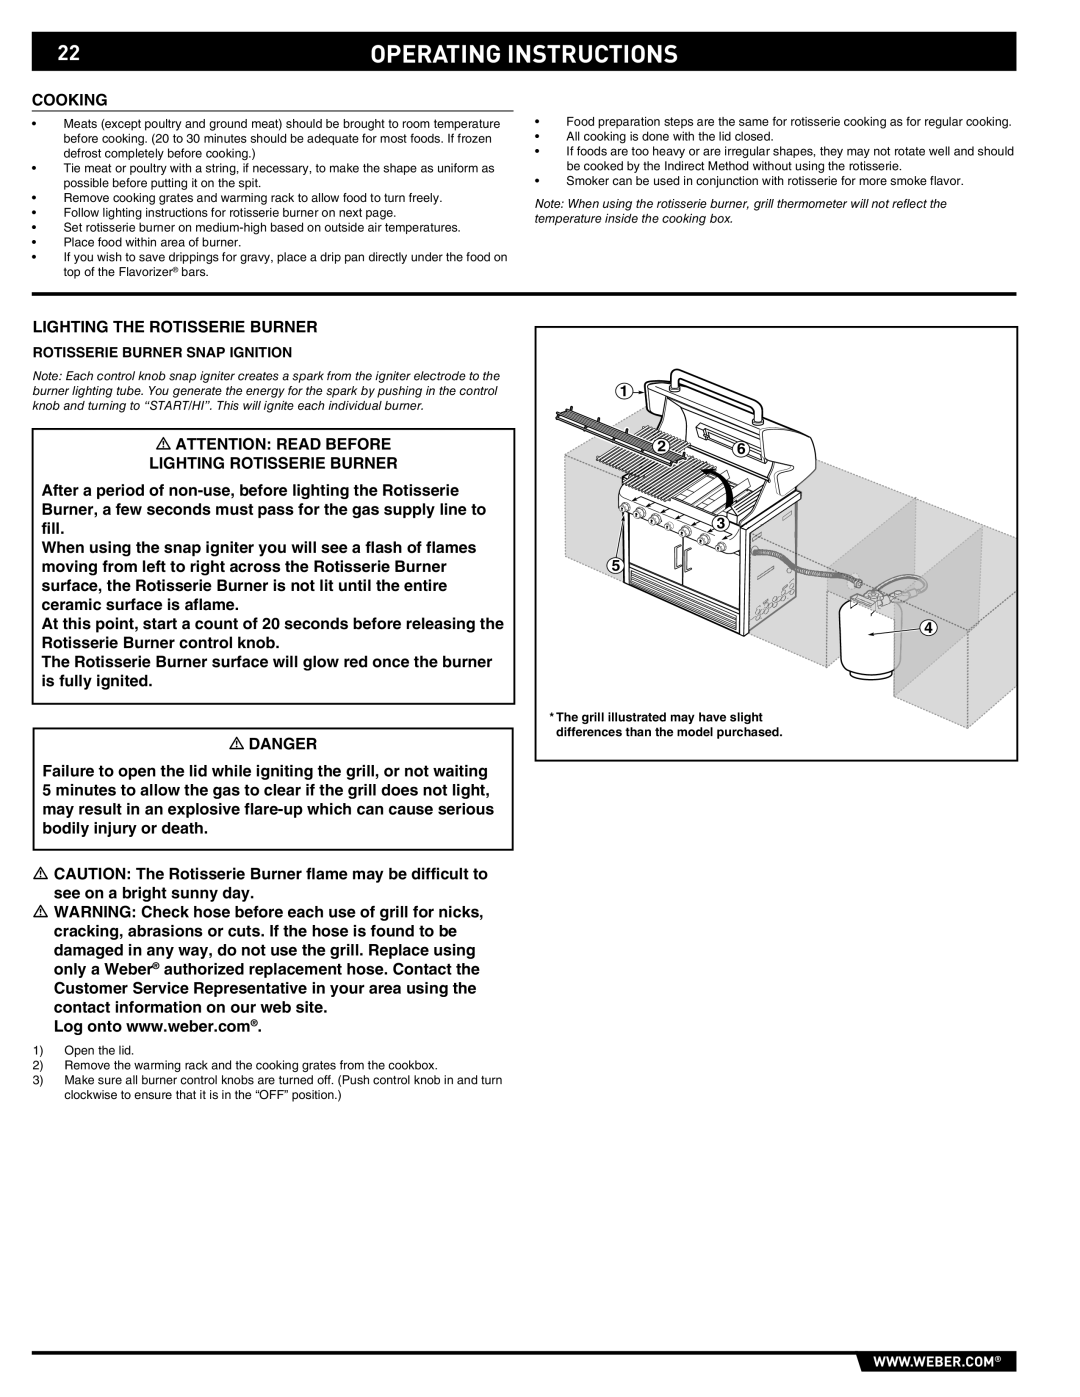 Weber S-460 manual Operating Instructions, Rotisserie Burner Snap Ignition 